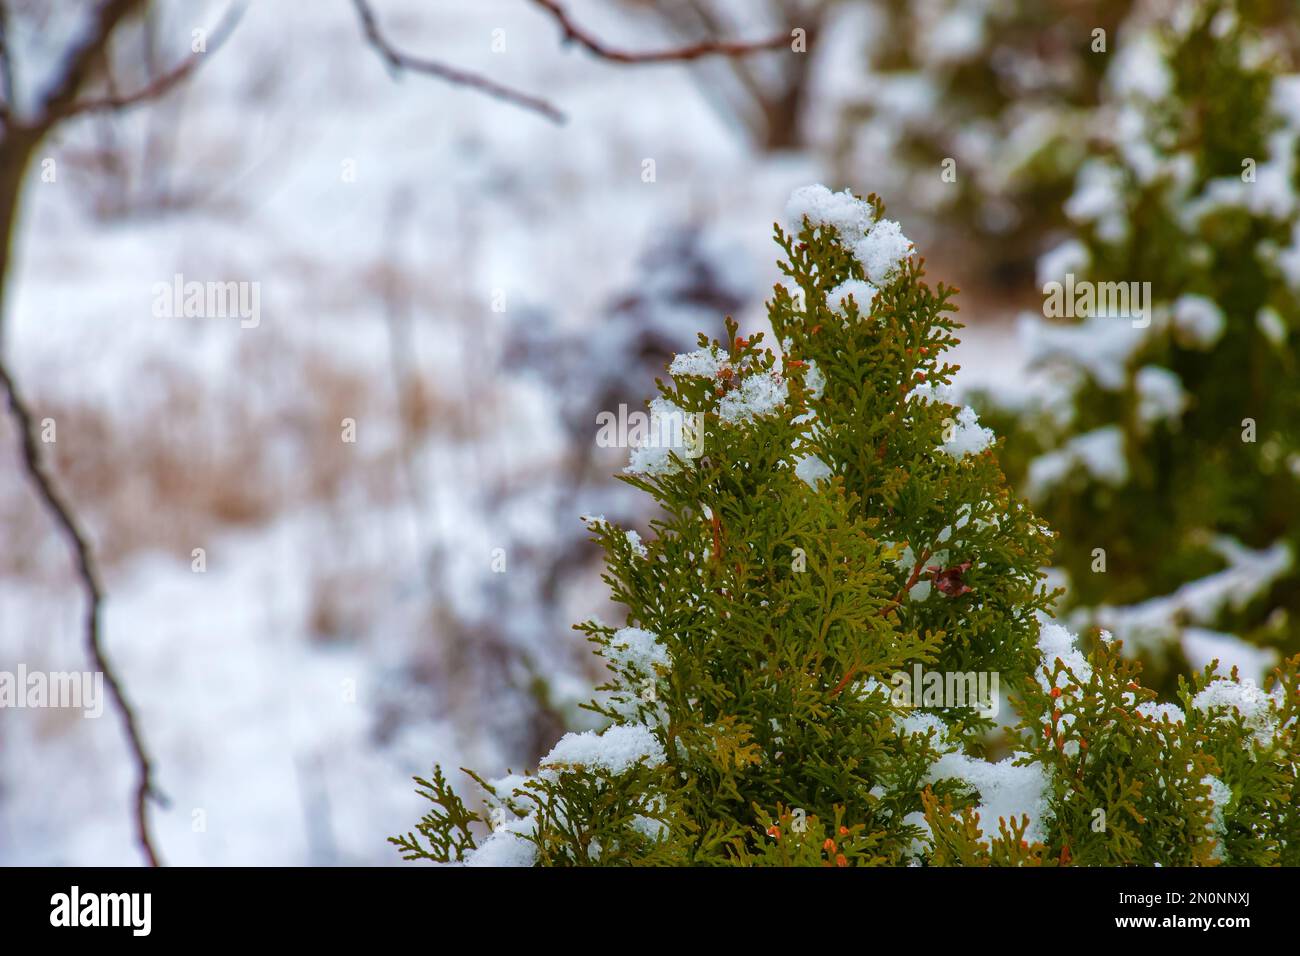 Thuja in the snow. Thuja orientalis Aurea Nana in winter. Green thuja bushes covered with white snow. Stock Photo